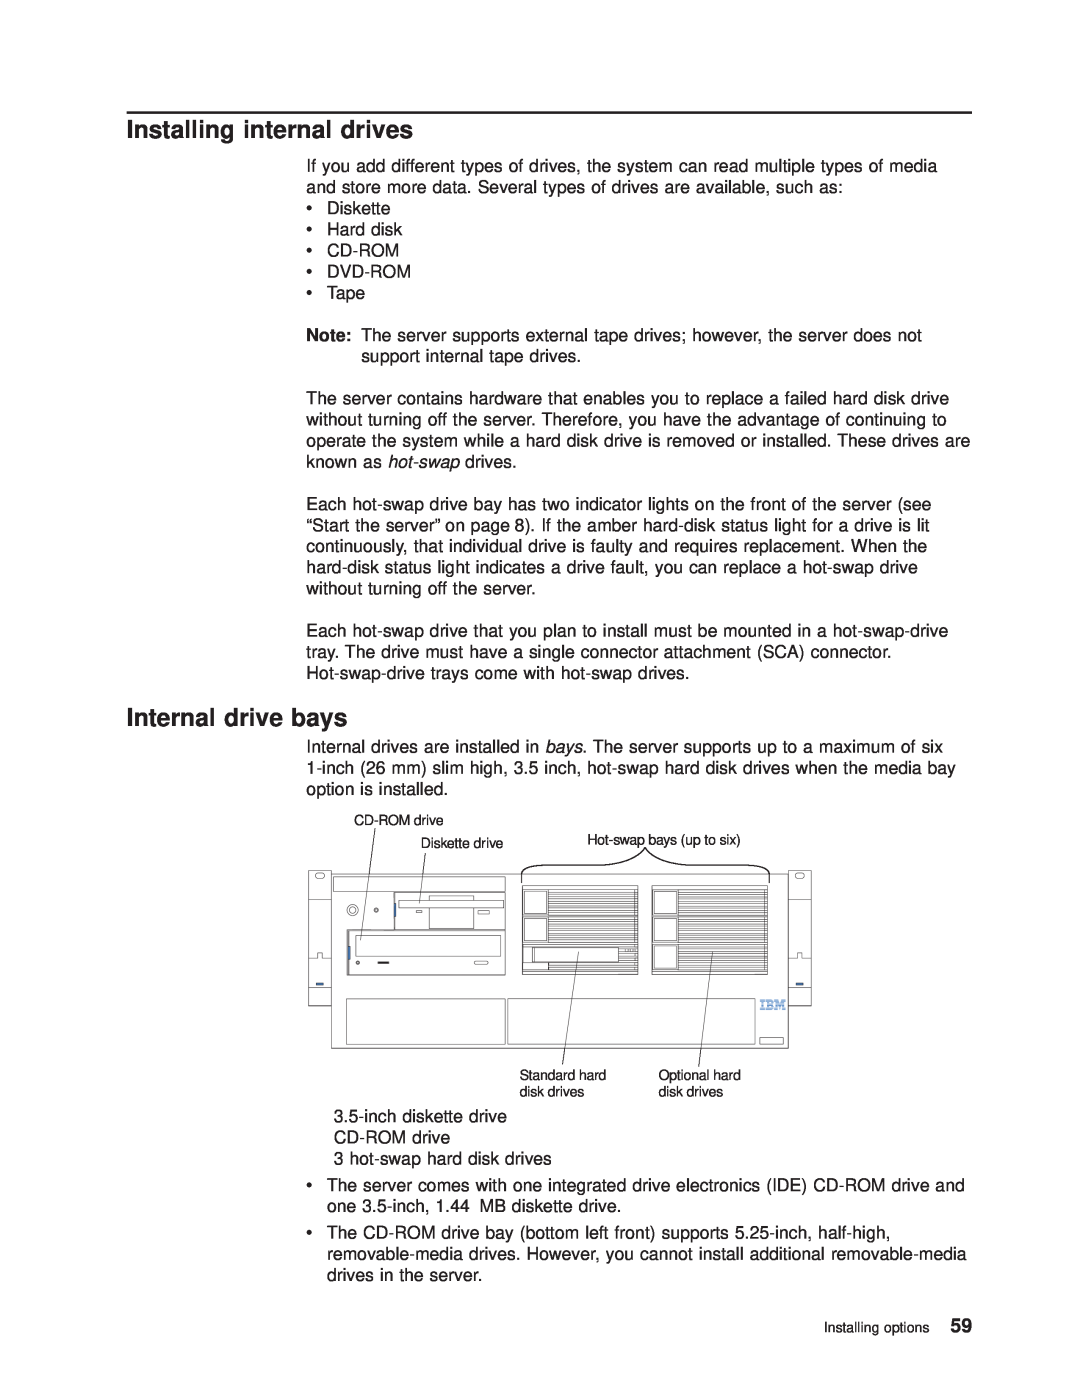 IBM 8682 manual Installing internal drives, Internal drive bays 